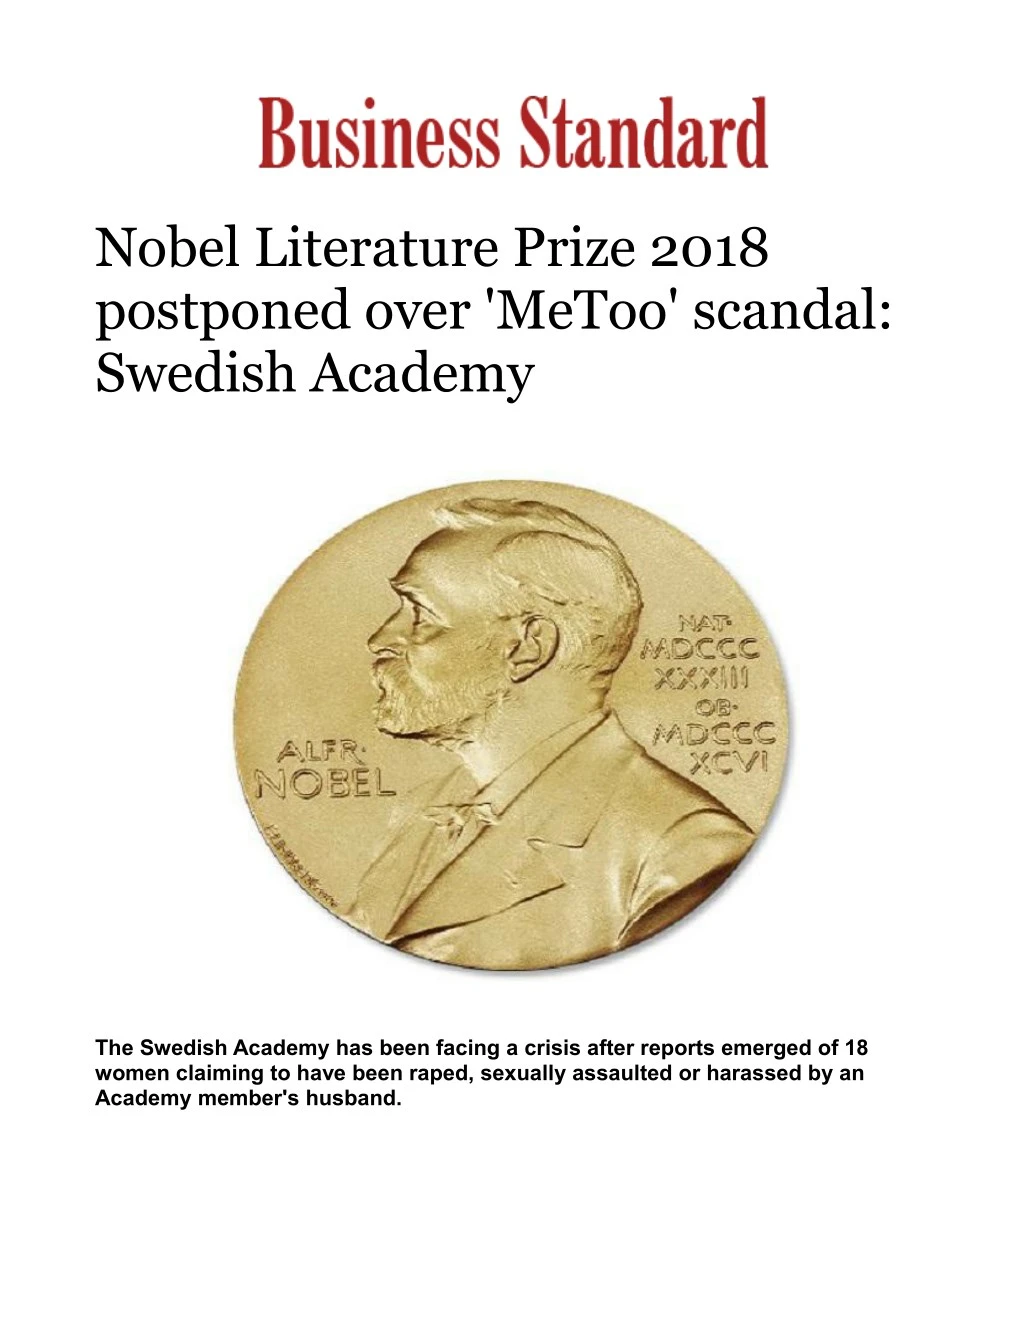 nobel literature prize 2018 postponed over metoo